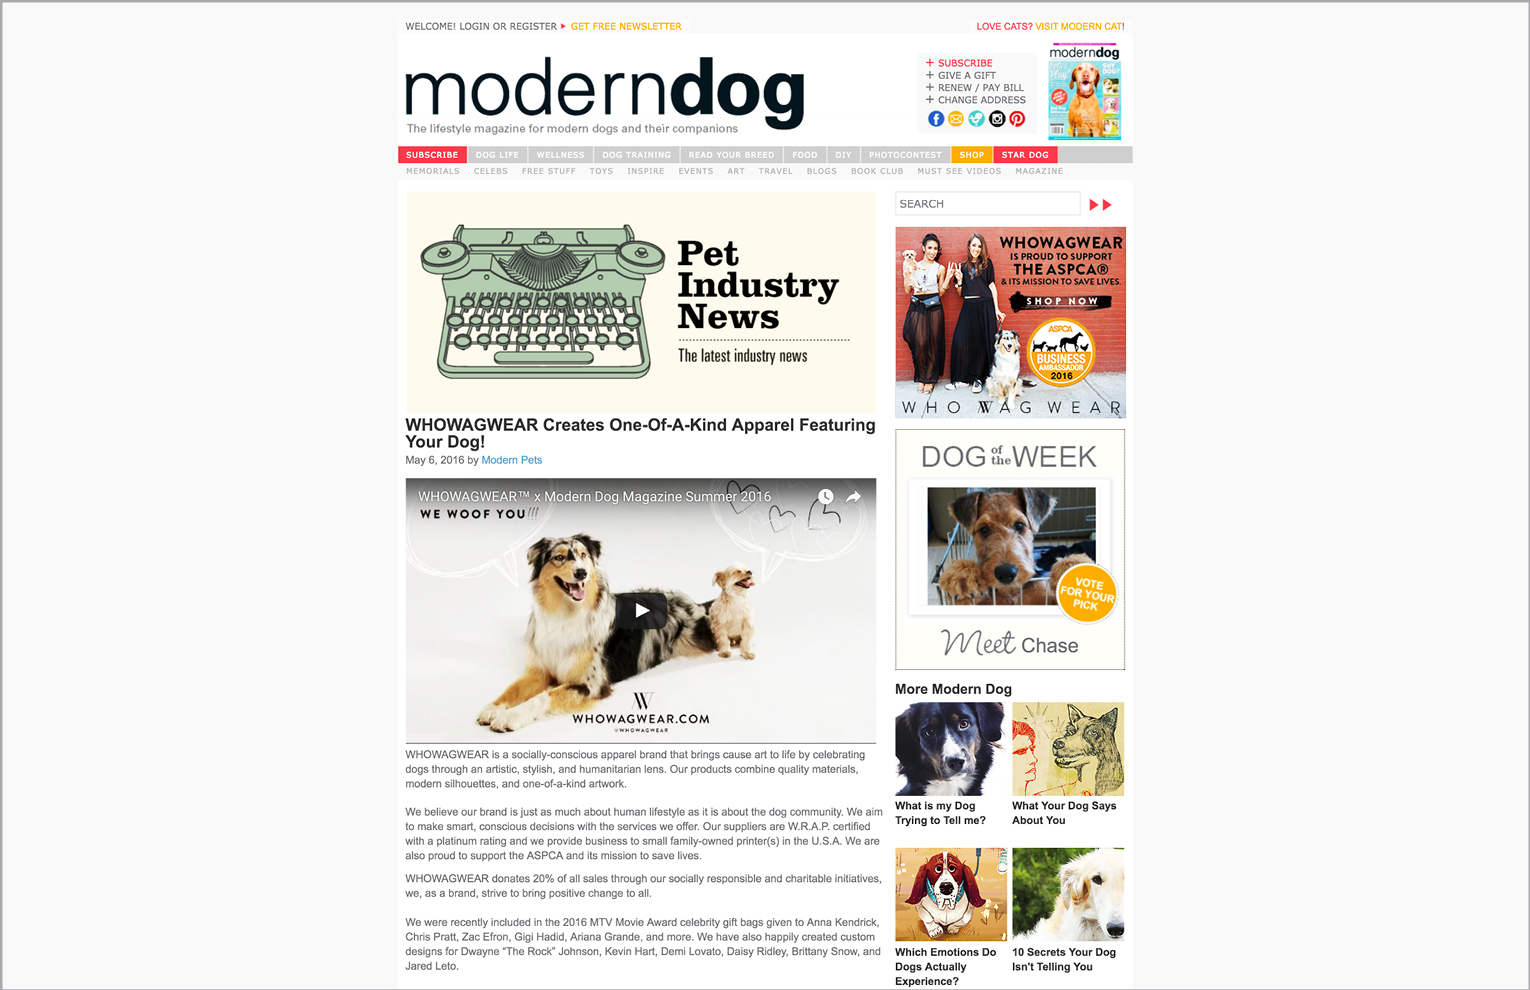 kaytona_kristin aytona_whowagwear_modern dog magazine_et al 1.jpg